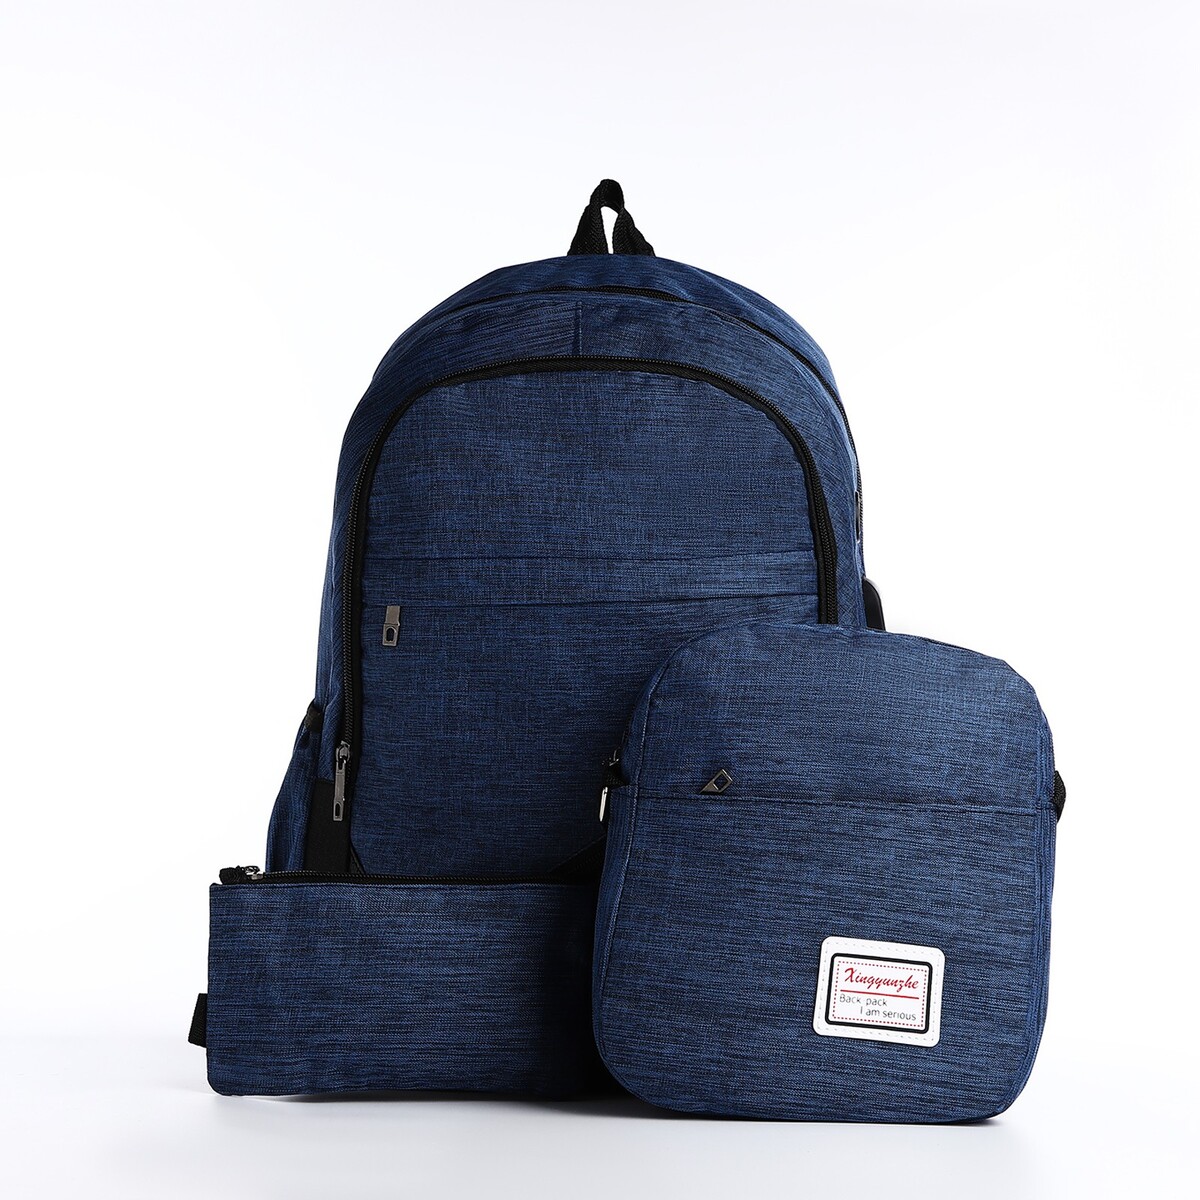 Рюкзак на молнии, с usb, 4 наружных кармана, сумка, пенал, цвет синий рюкзак детский на молнии 3 наружных кармана синий